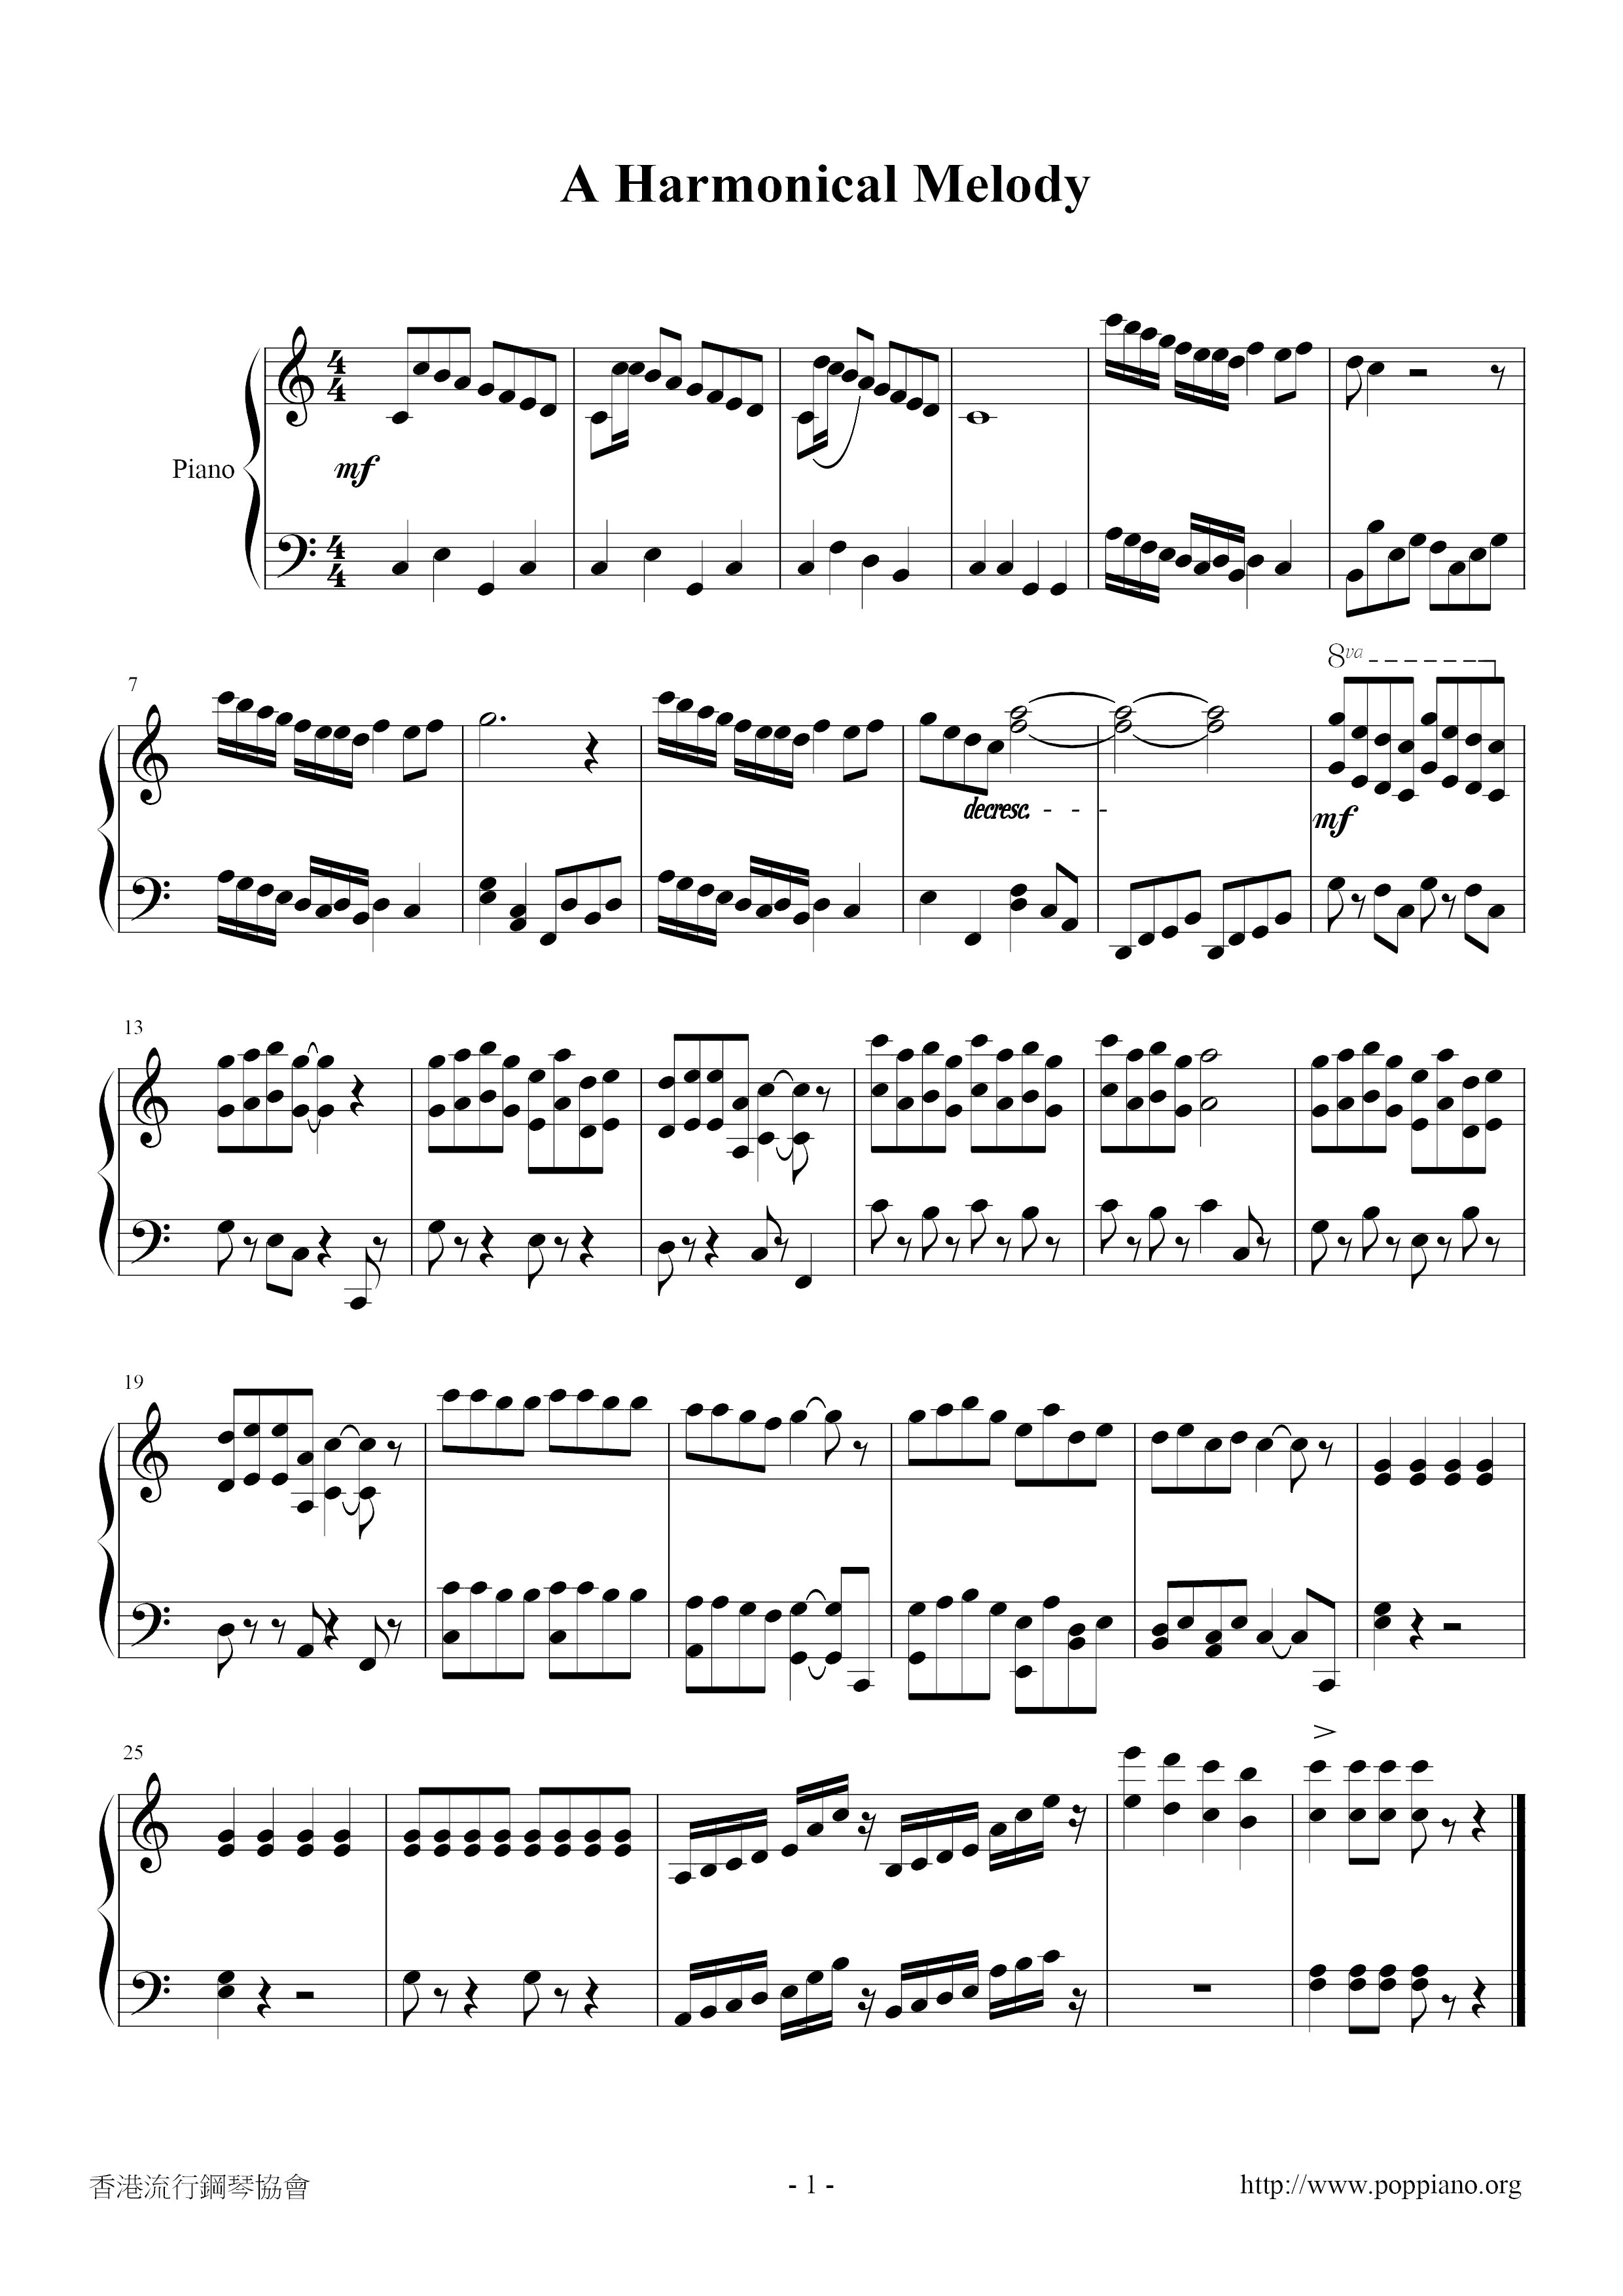 A Harmonical Melody Score